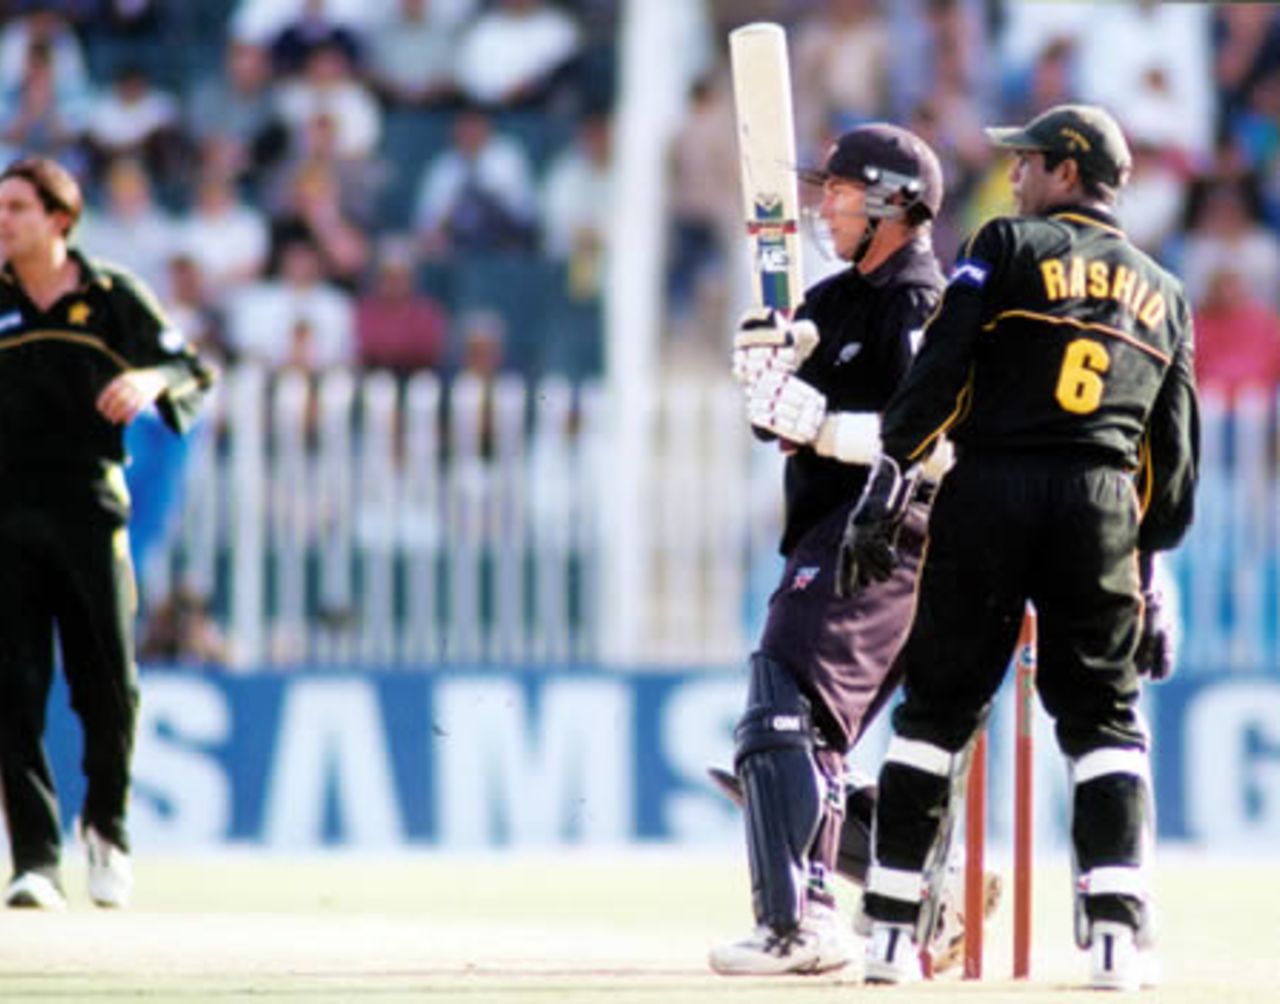 Craig McMillan hits Afridi to leg during his 105 run innings - 2nd ODI at Rawalpindi, New Zealand v Pakistan, 24 Apr 2002